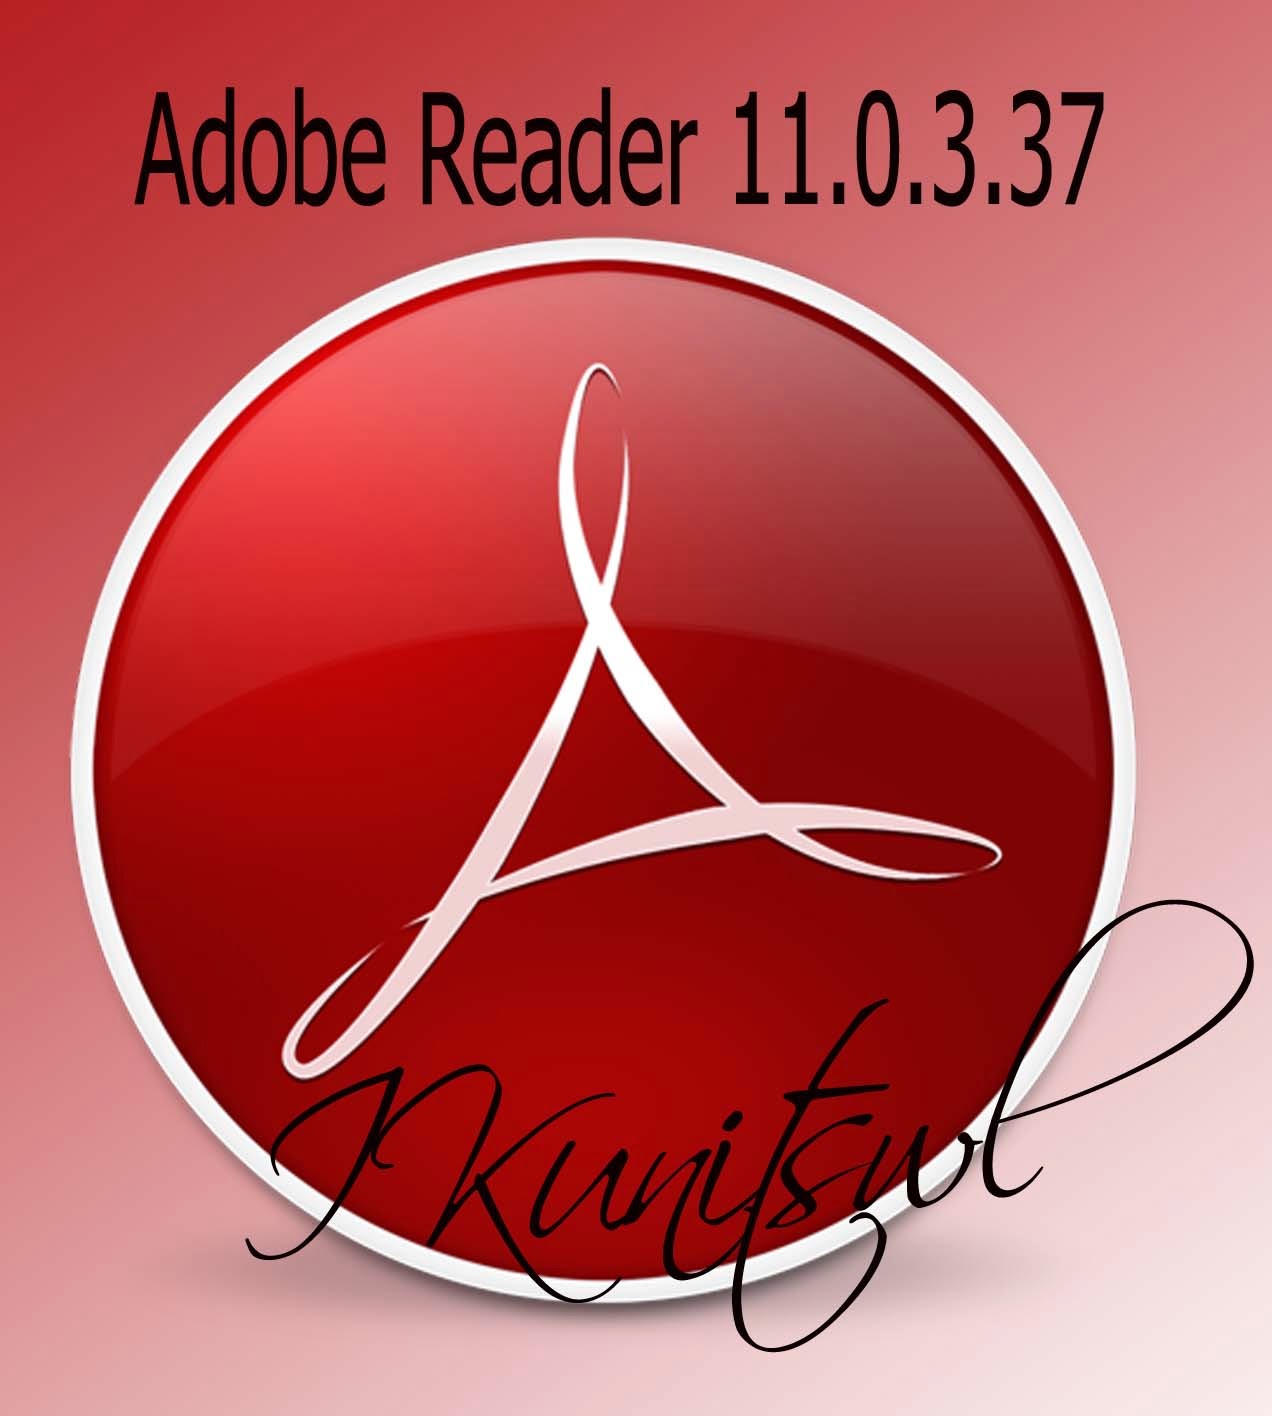 abo reader software download